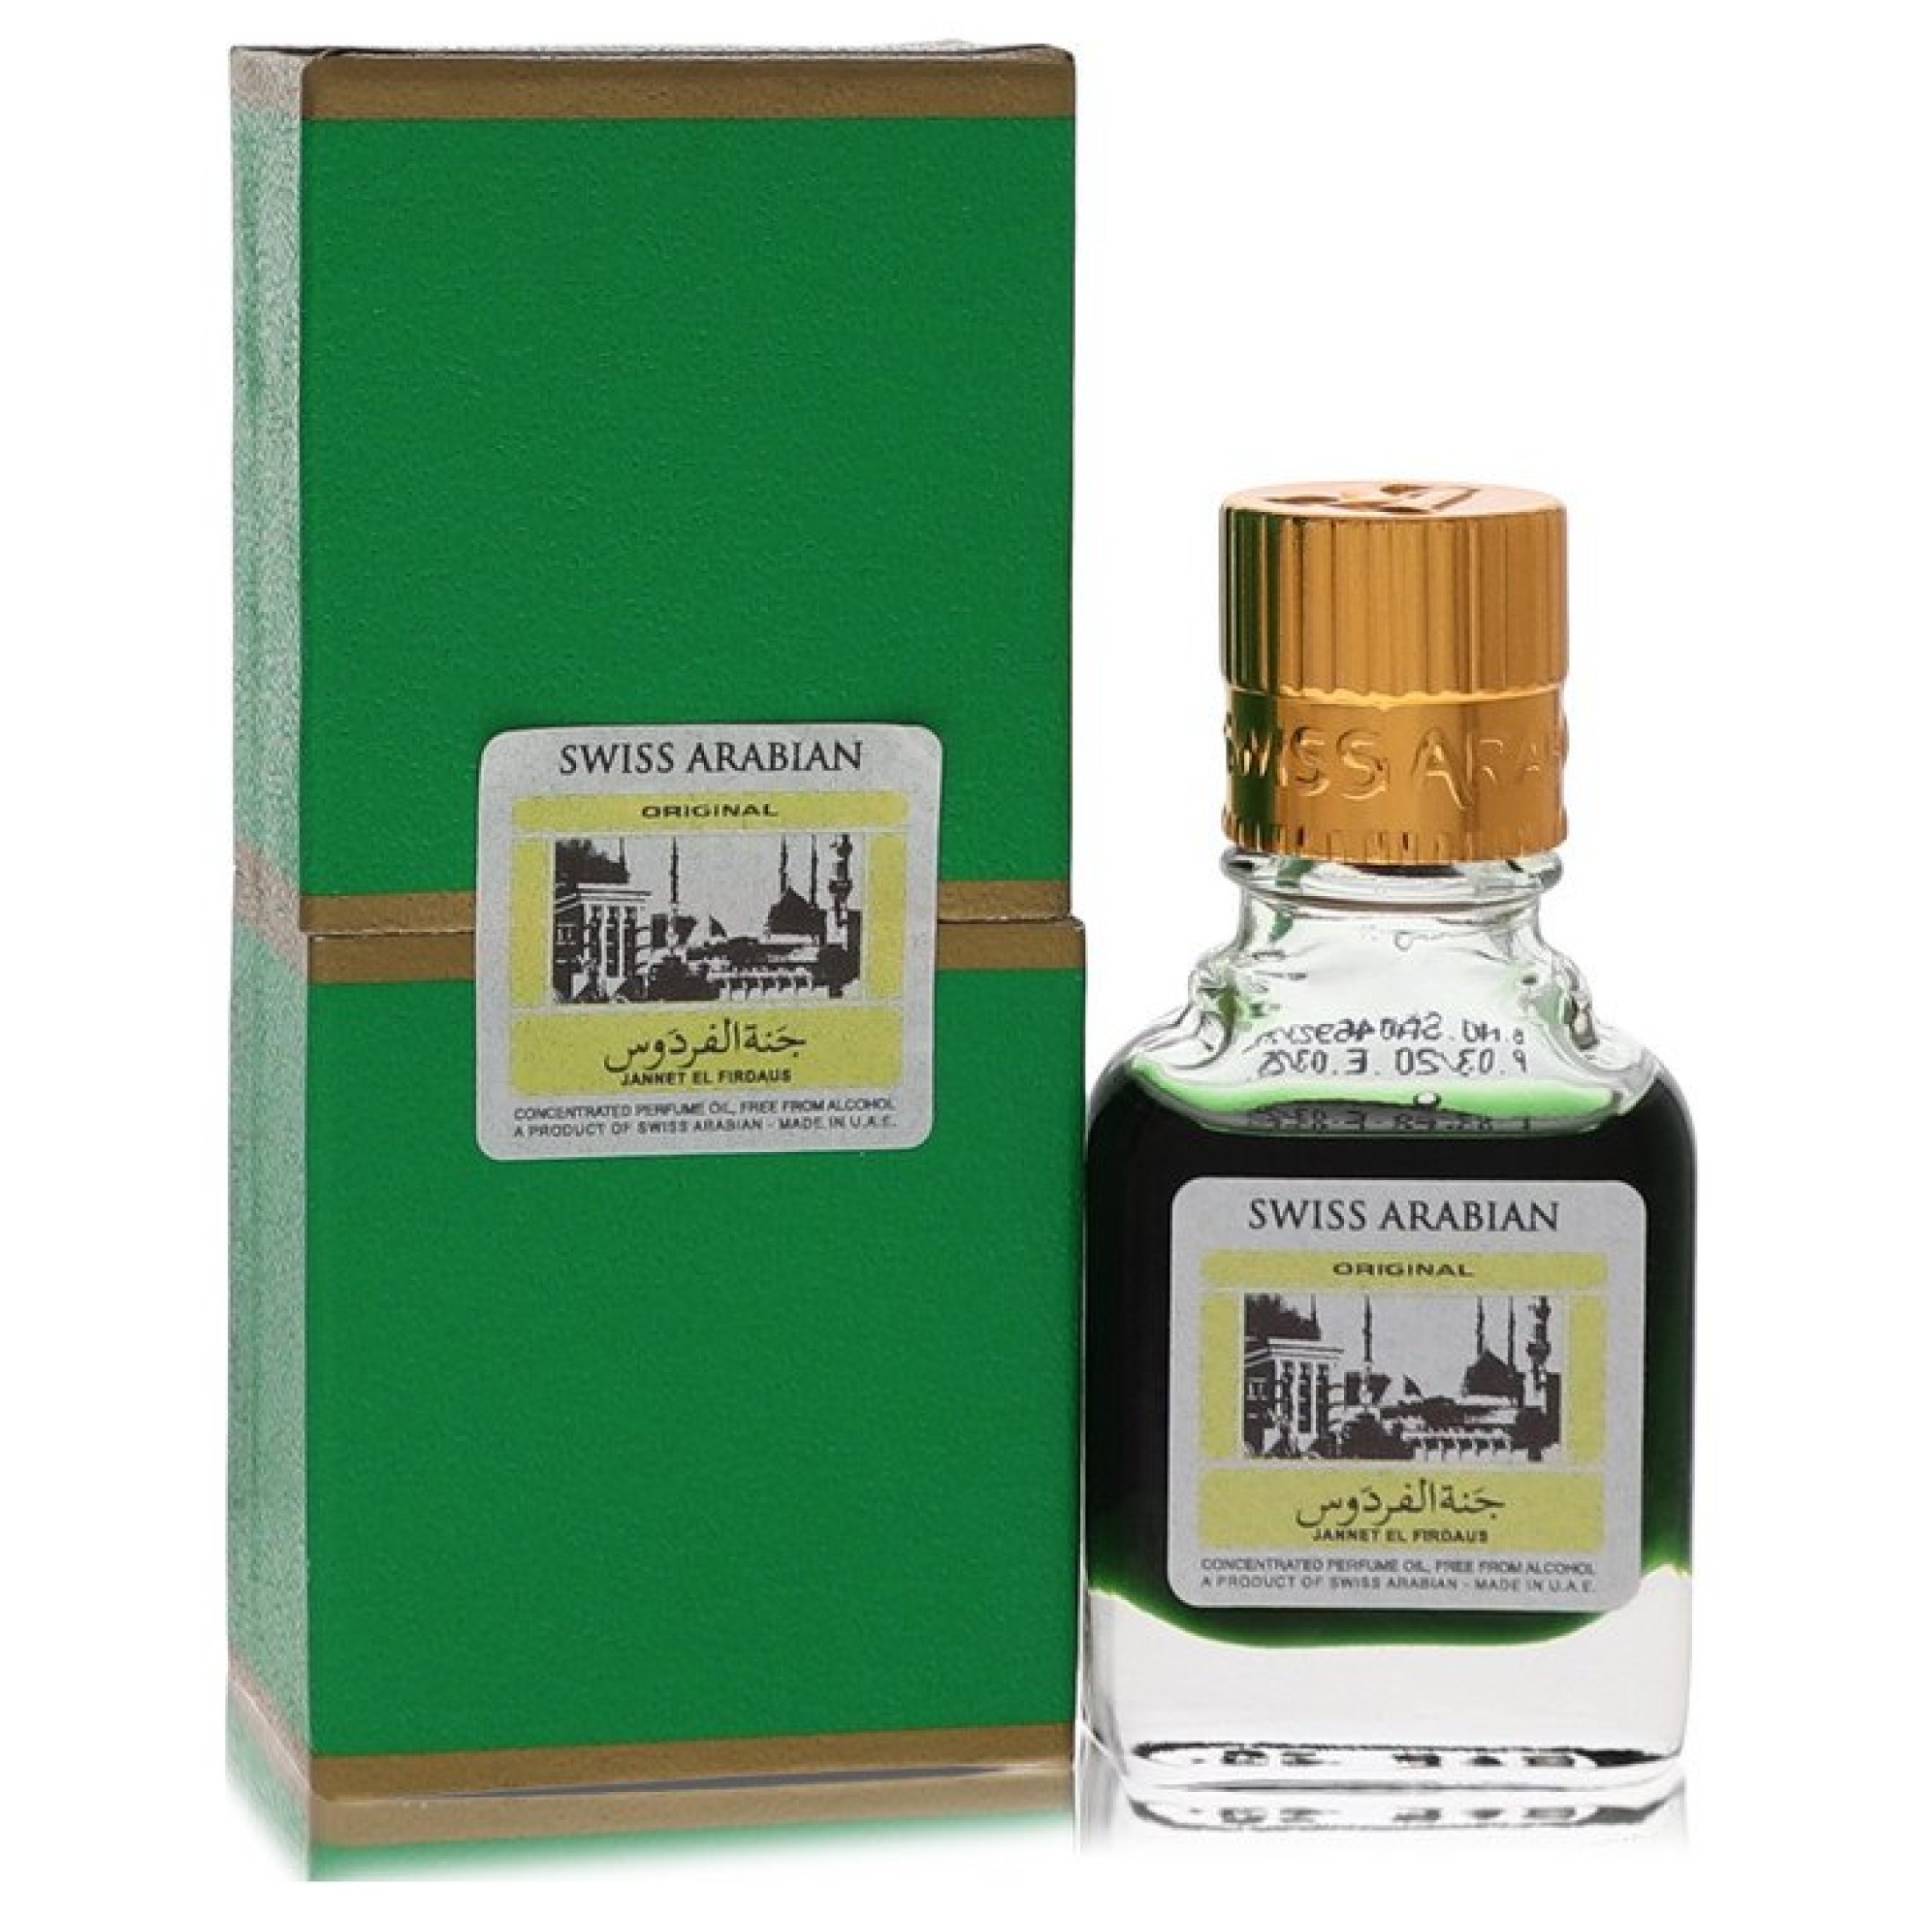 Swiss Arabian Jannet El Firdaus Concentrated Perfume Oil Free From Alcohol (Unisex Black Edition Floral Attar) 9 ml von Swiss Arabian